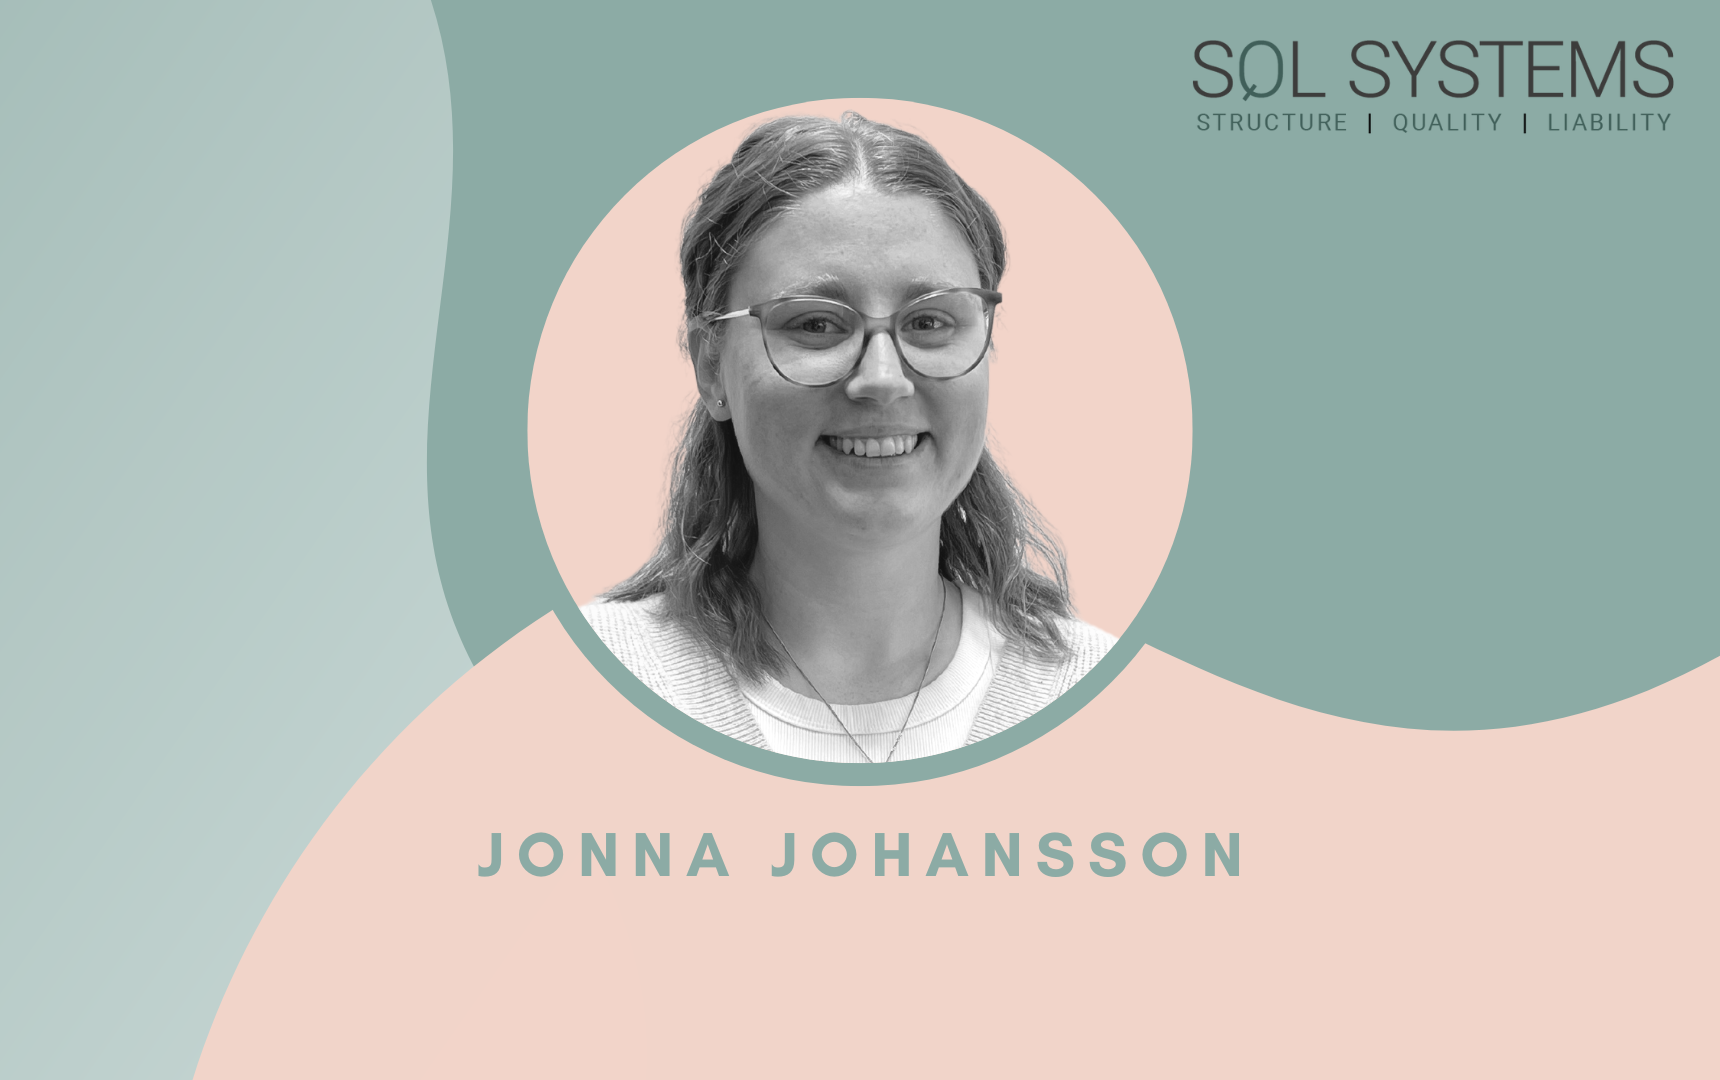 Jonna-Johansson-SQL-Systems